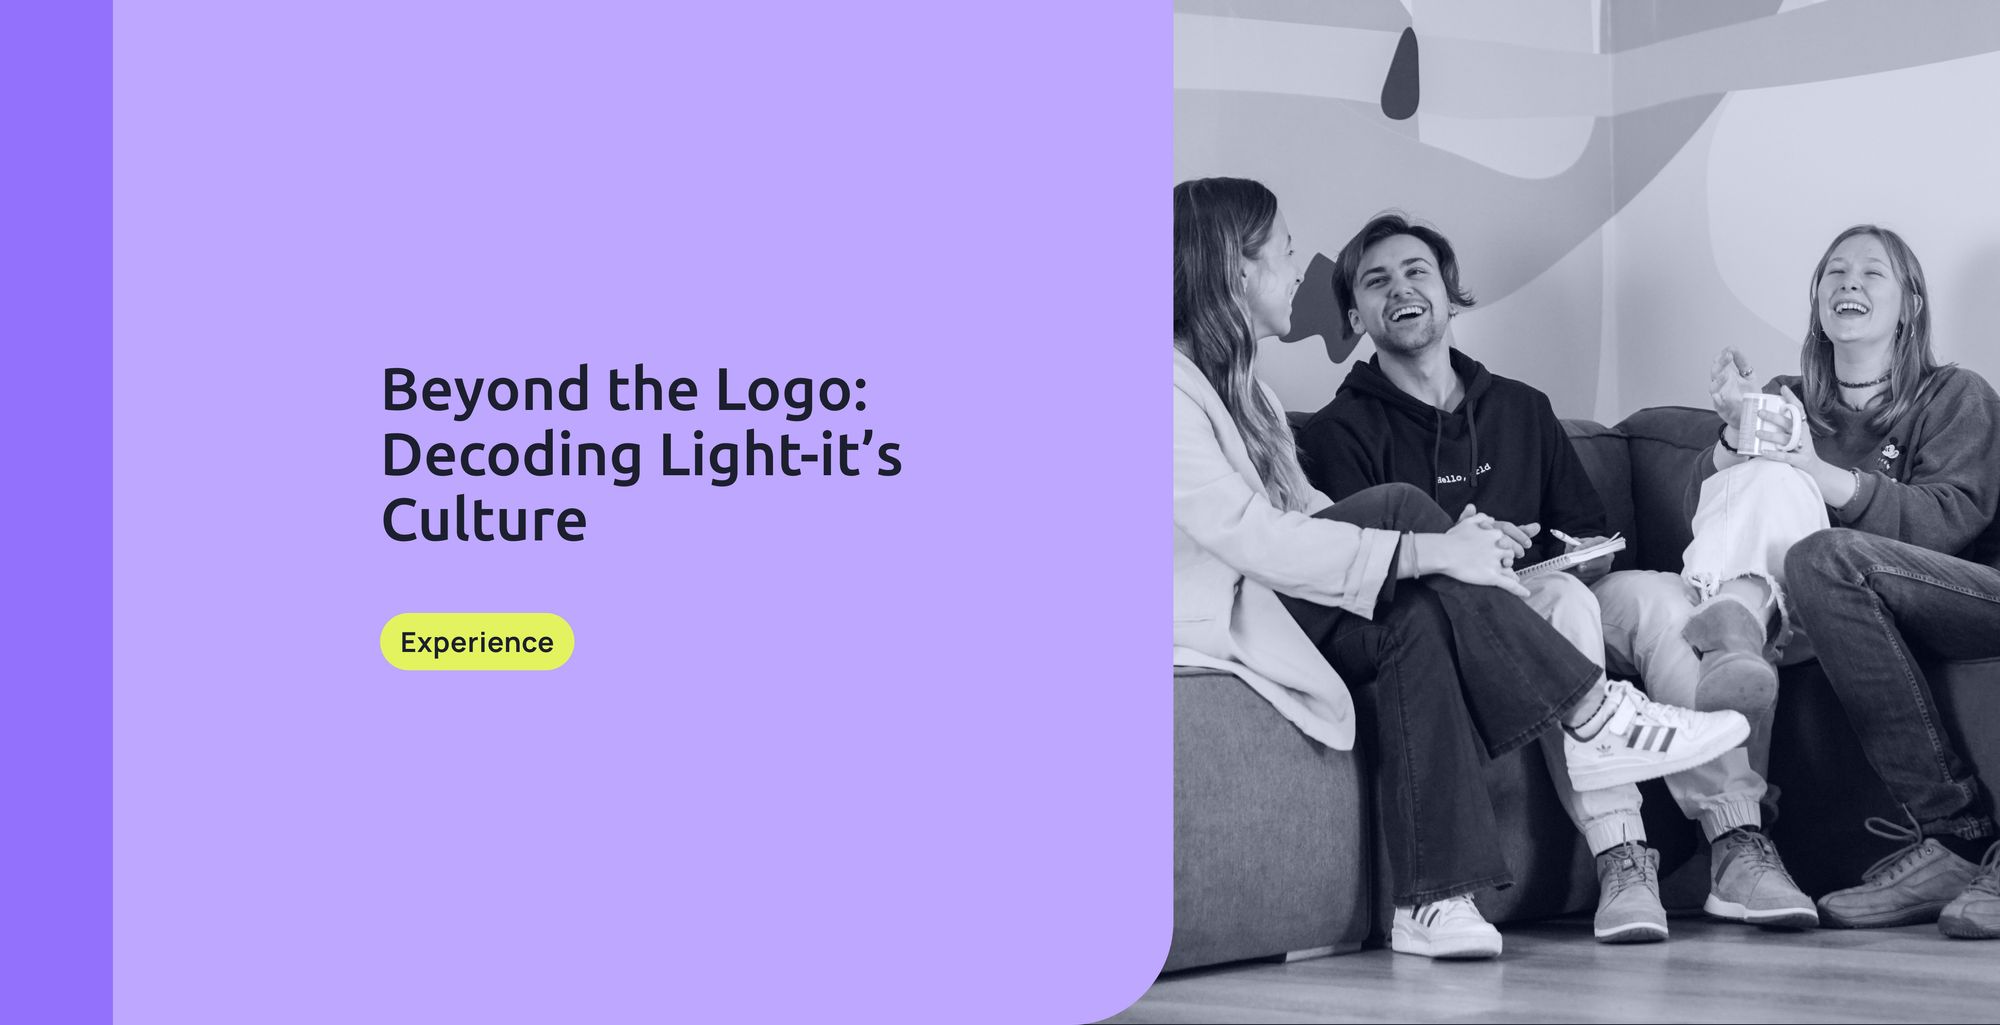 Beyond the Logo: Decoding Light-it’s Culture